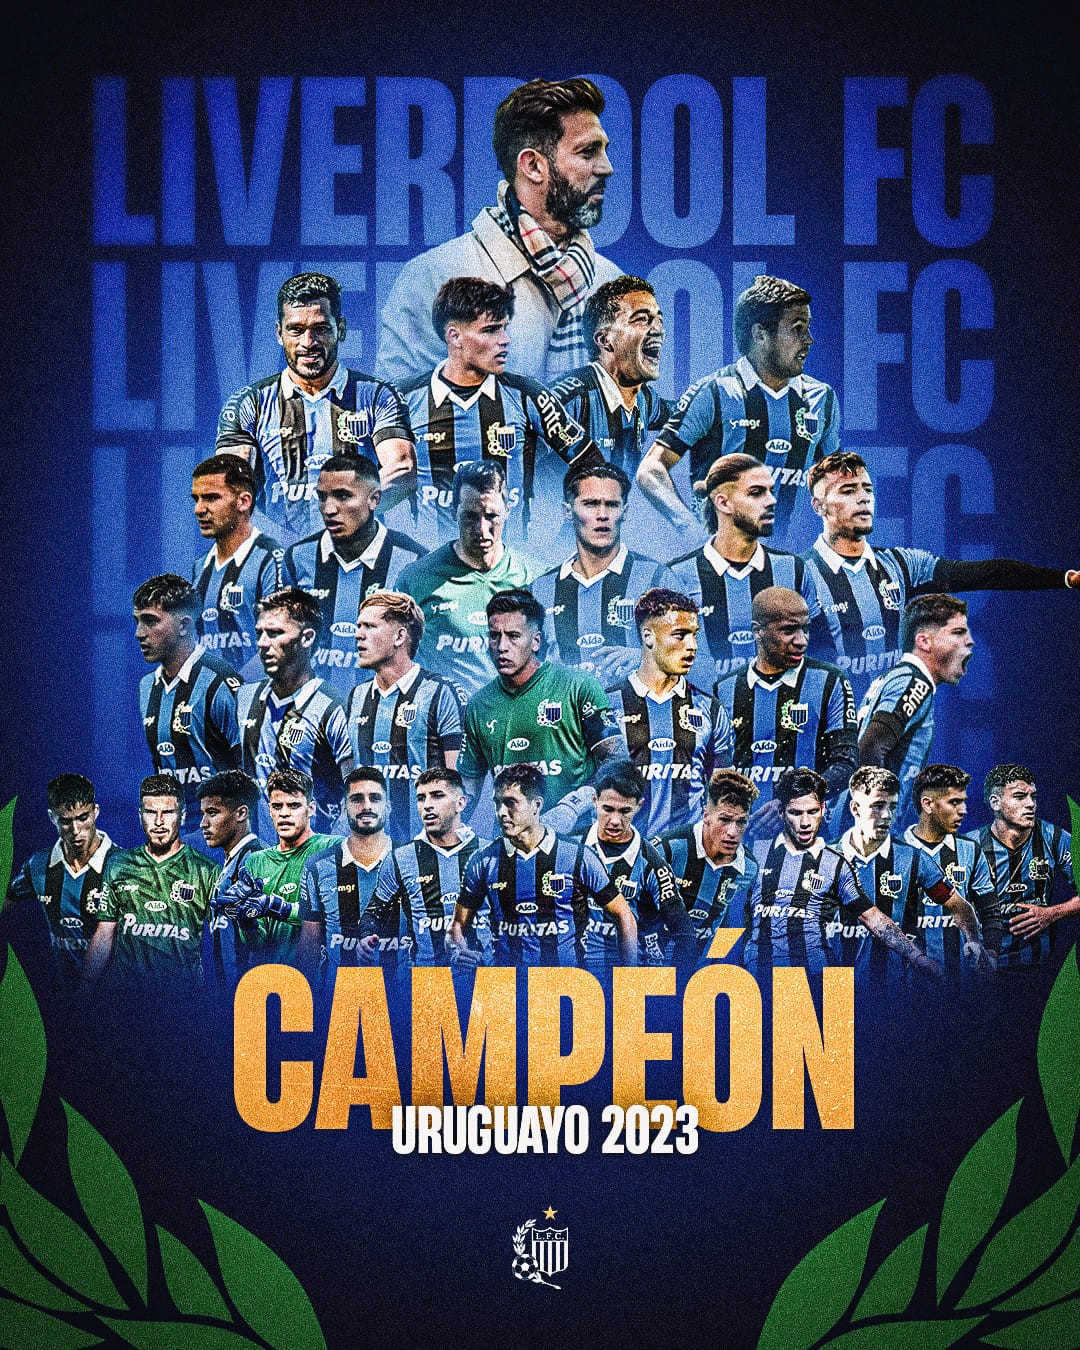 Liverpool Campeon Uruguayo 2023